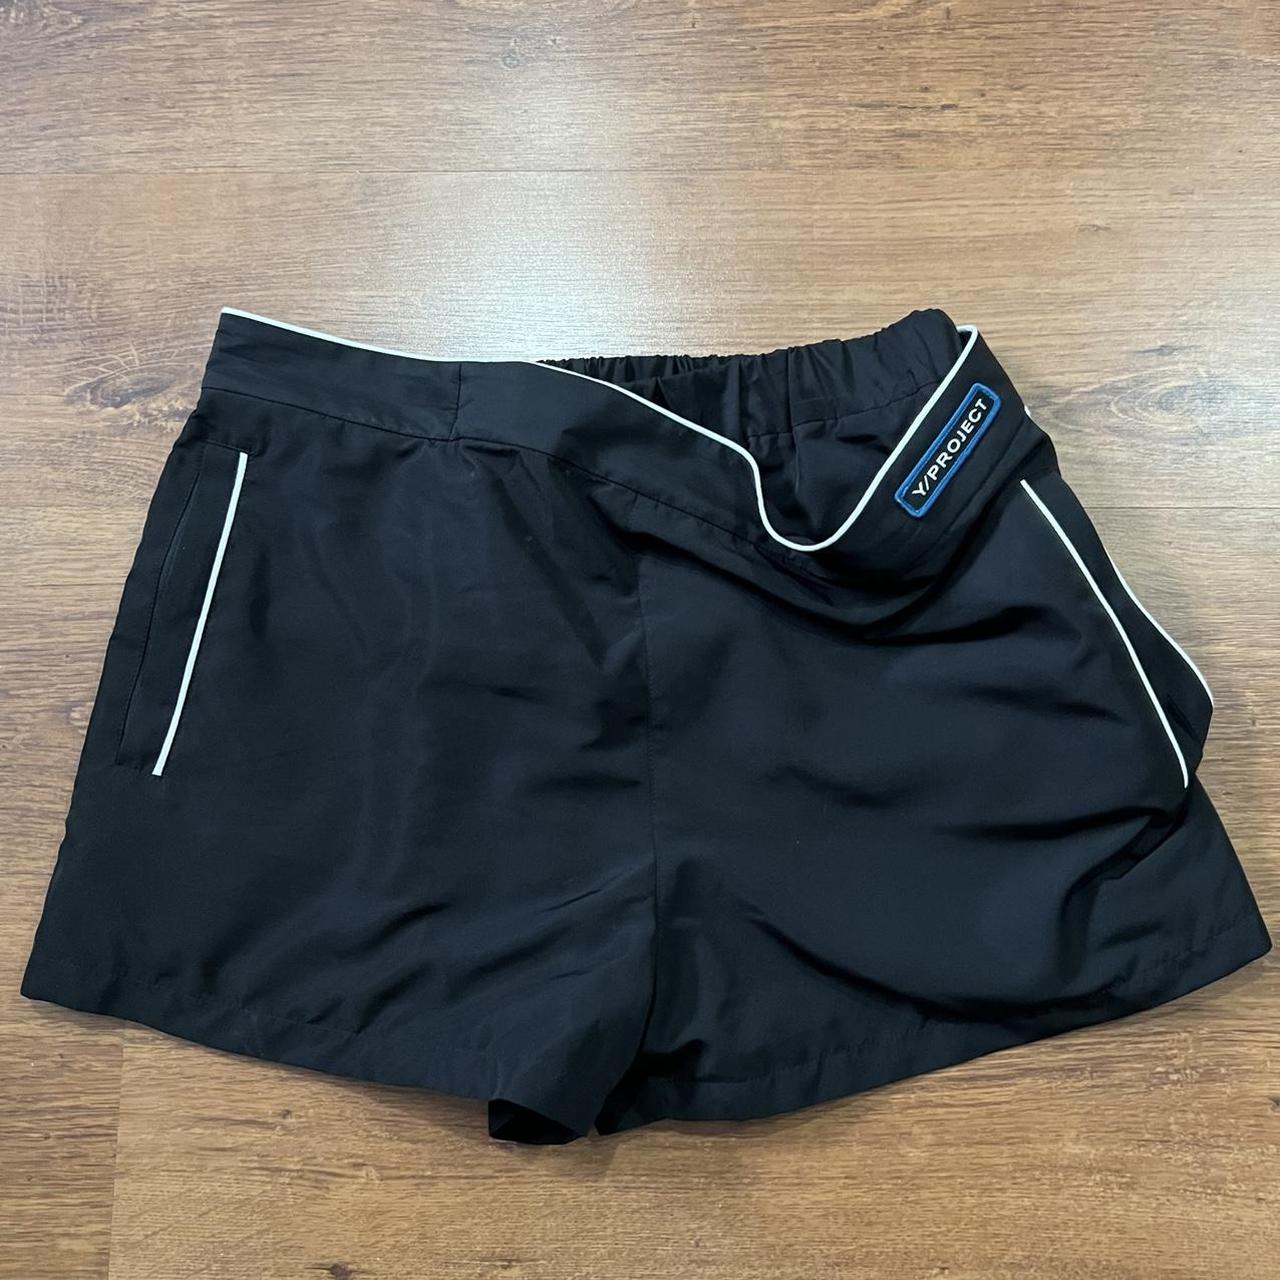 Y / project 5 pocket lazy shorts + zipper Sz Large... - Depop